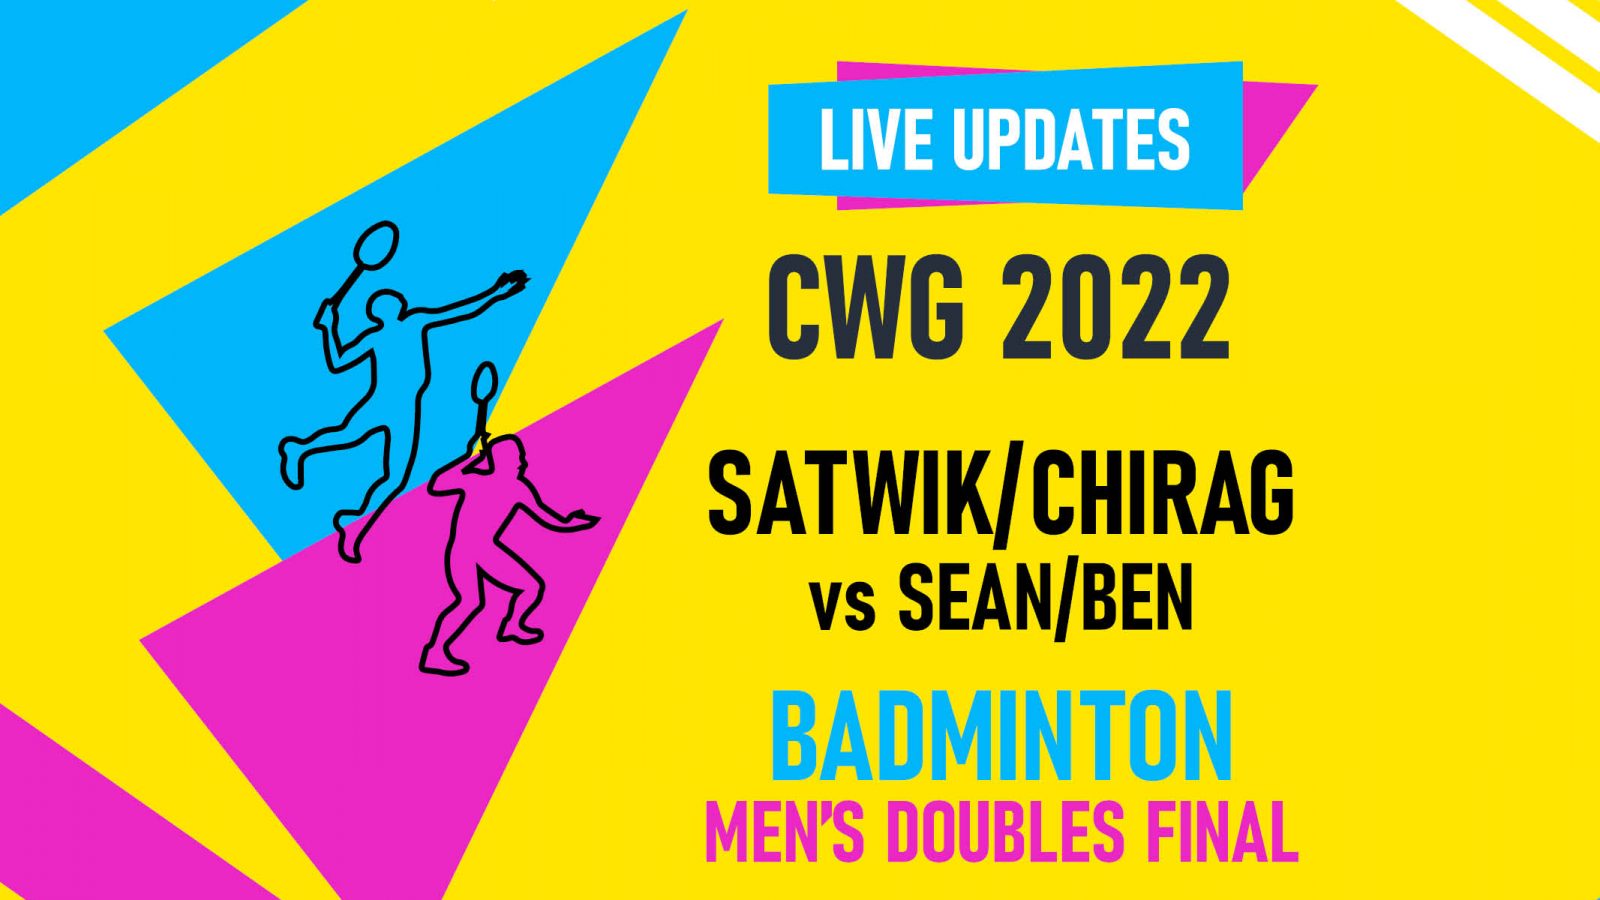 mens doubles badminton cwg 2022 live